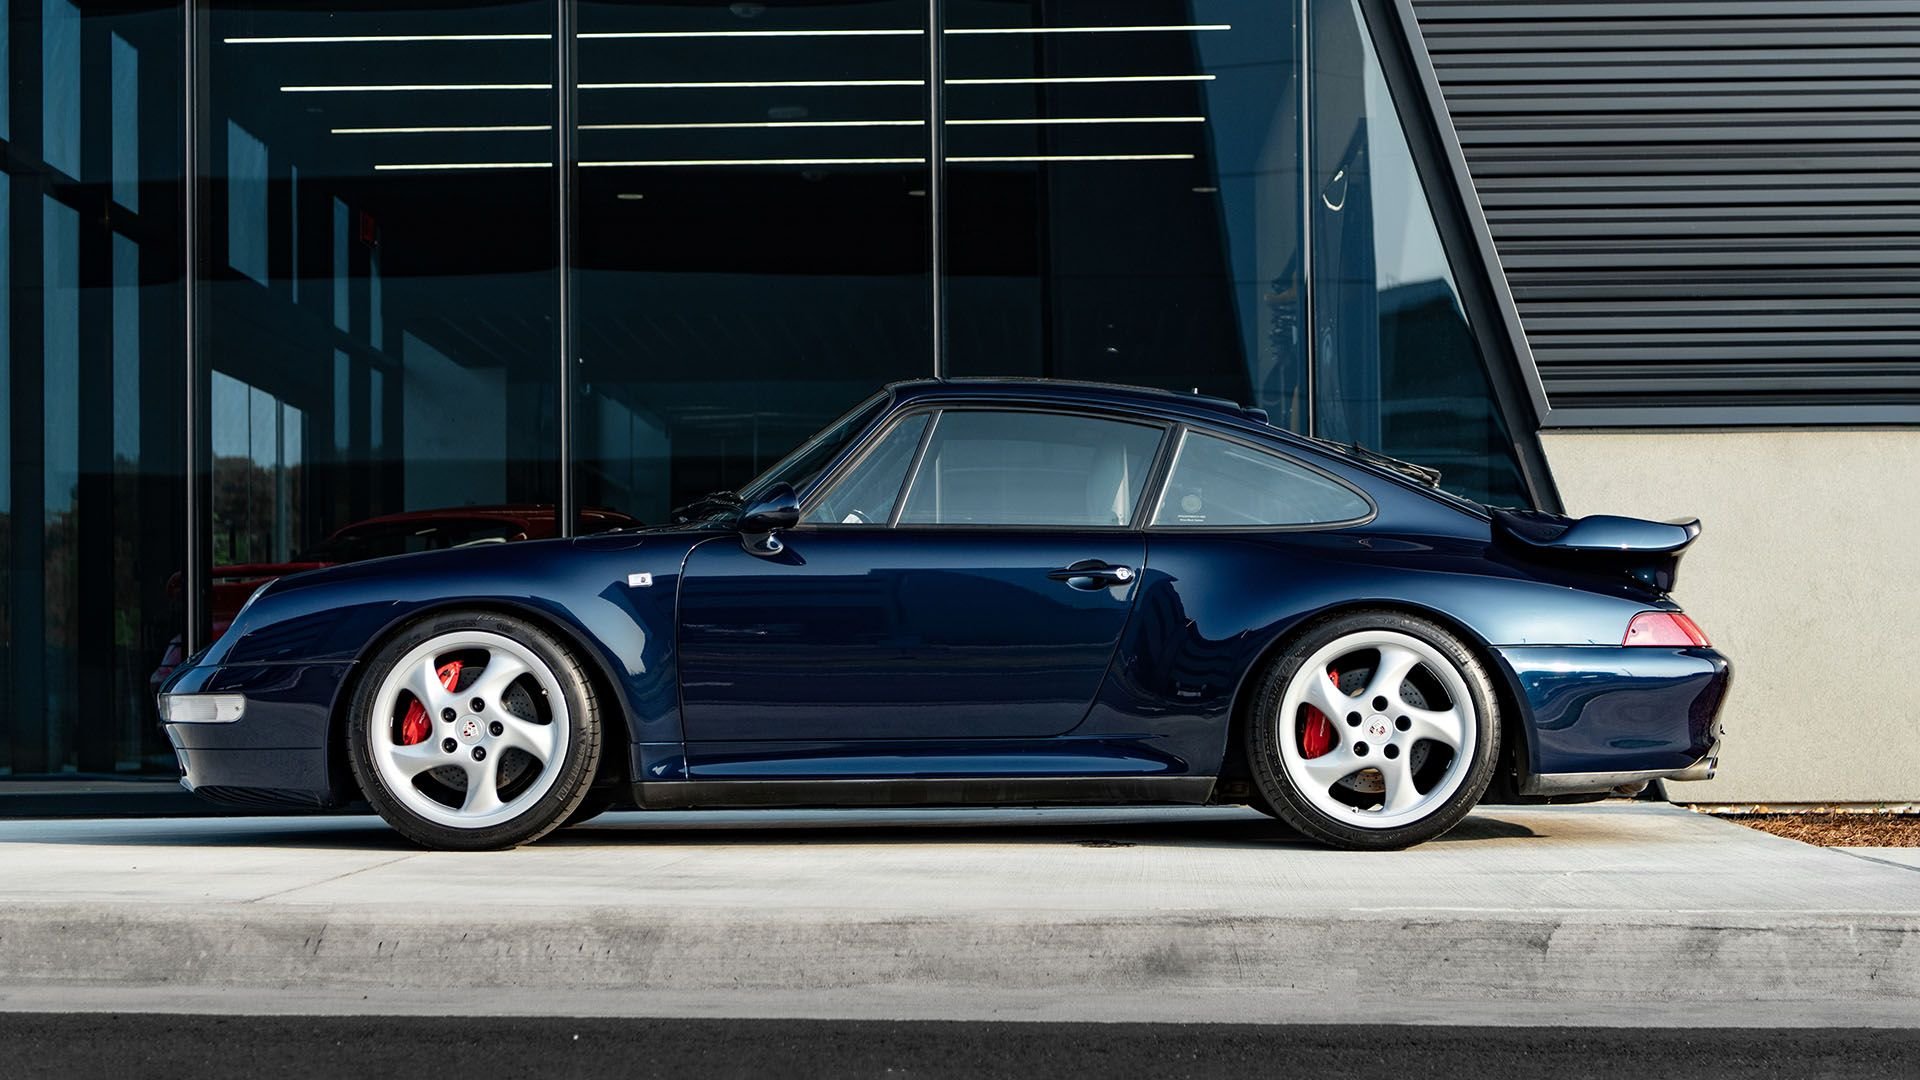 For Sale 1997 Porsche 911 Turbo X50 Exclusive